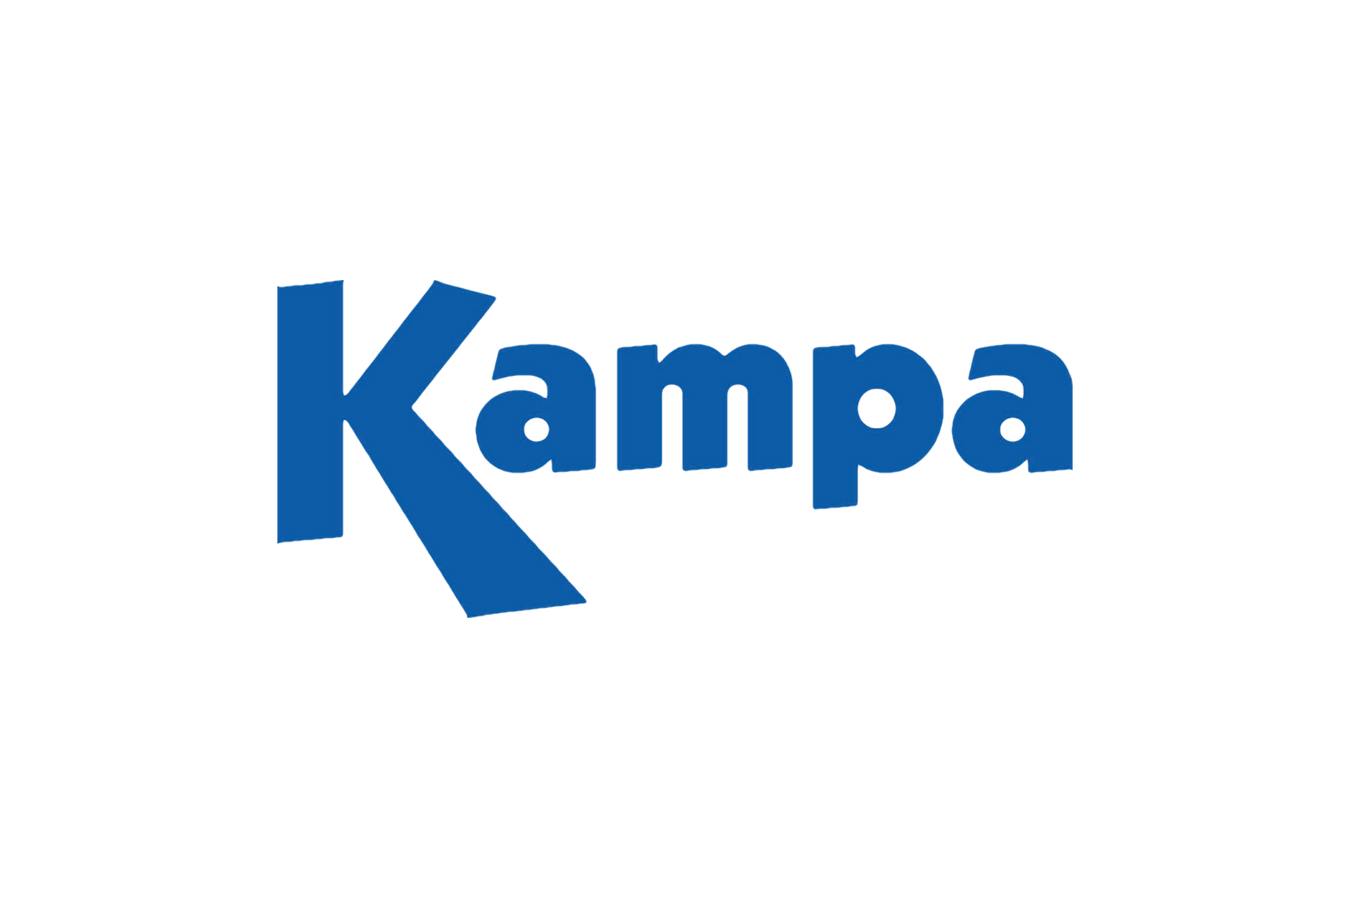 K k camping. Feed up logo.